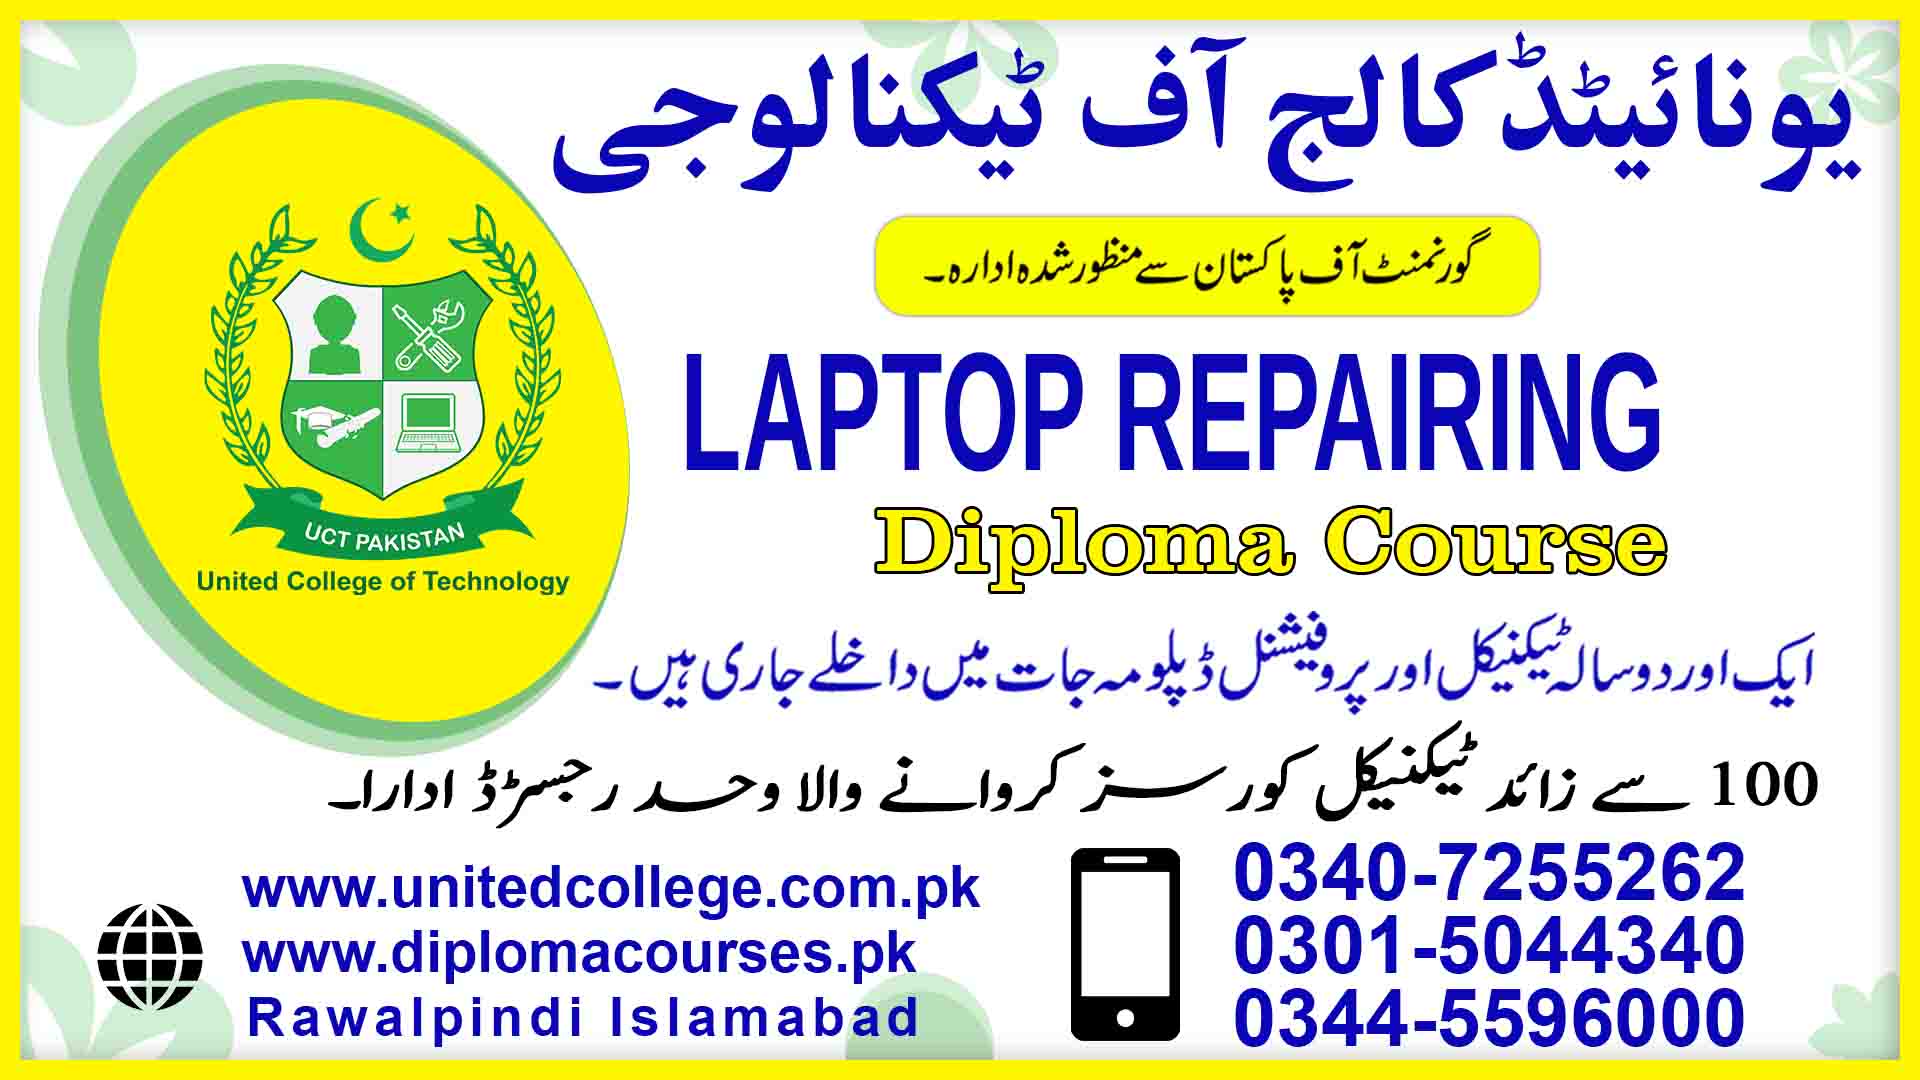 LAPTOP REPAIRING COURSE IN RAWALPINDI ISLAMABAD PAKISTAN